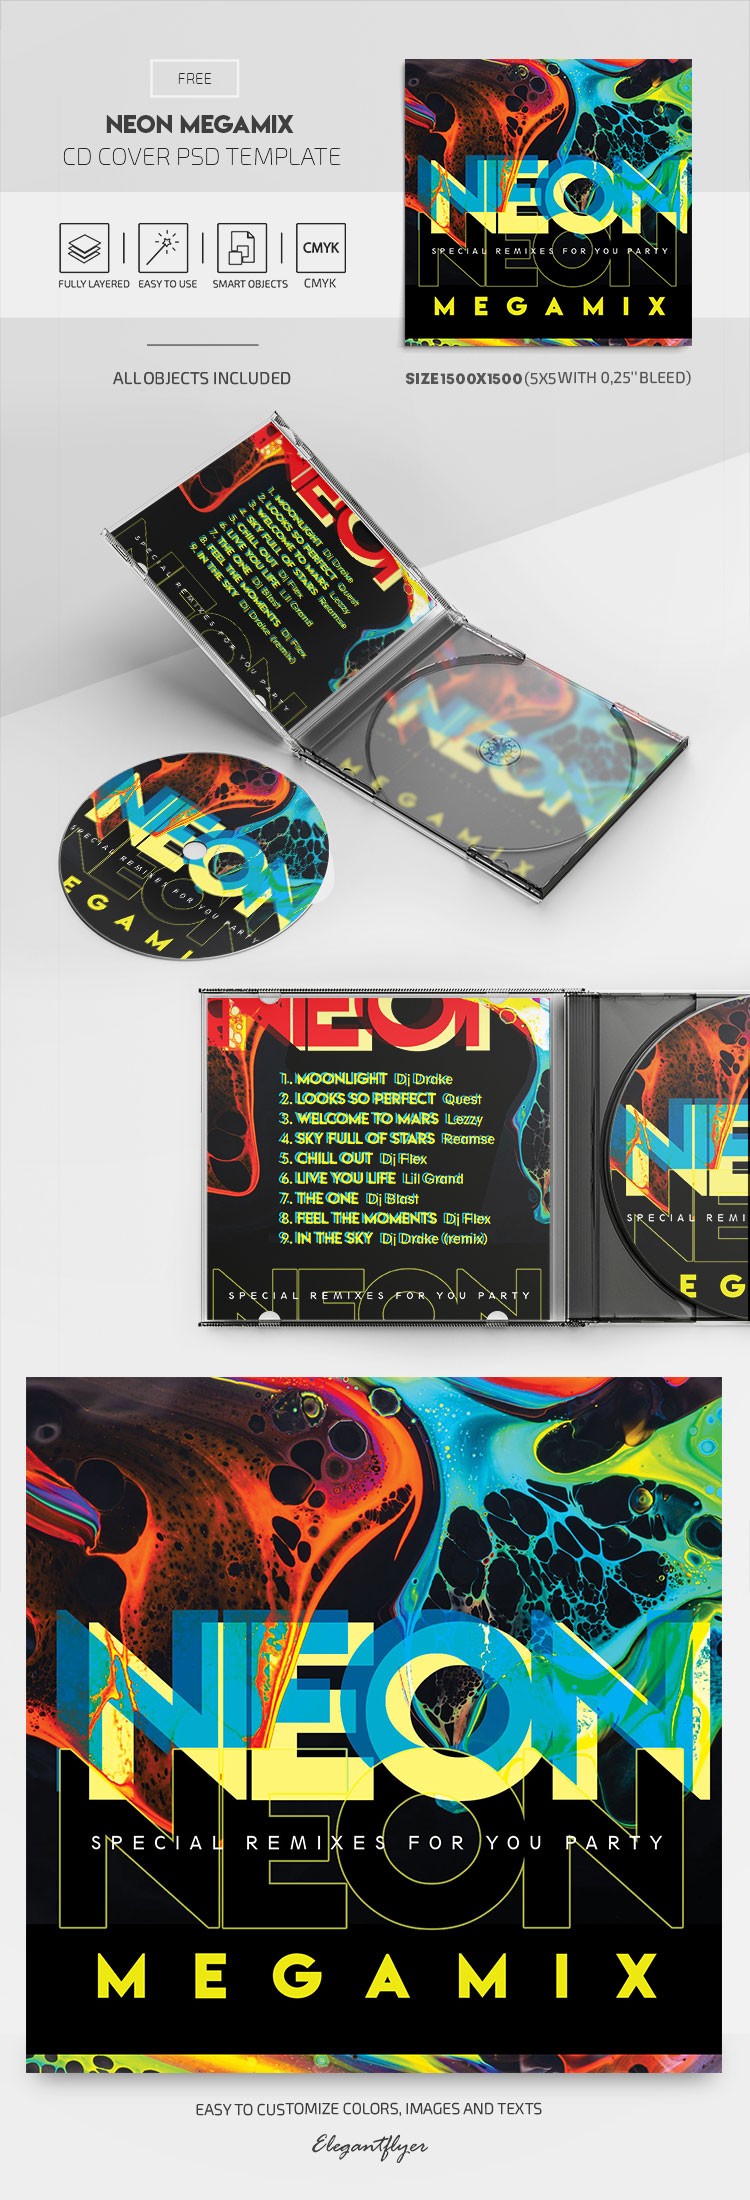 Capa do CD Neon Megamix by ElegantFlyer